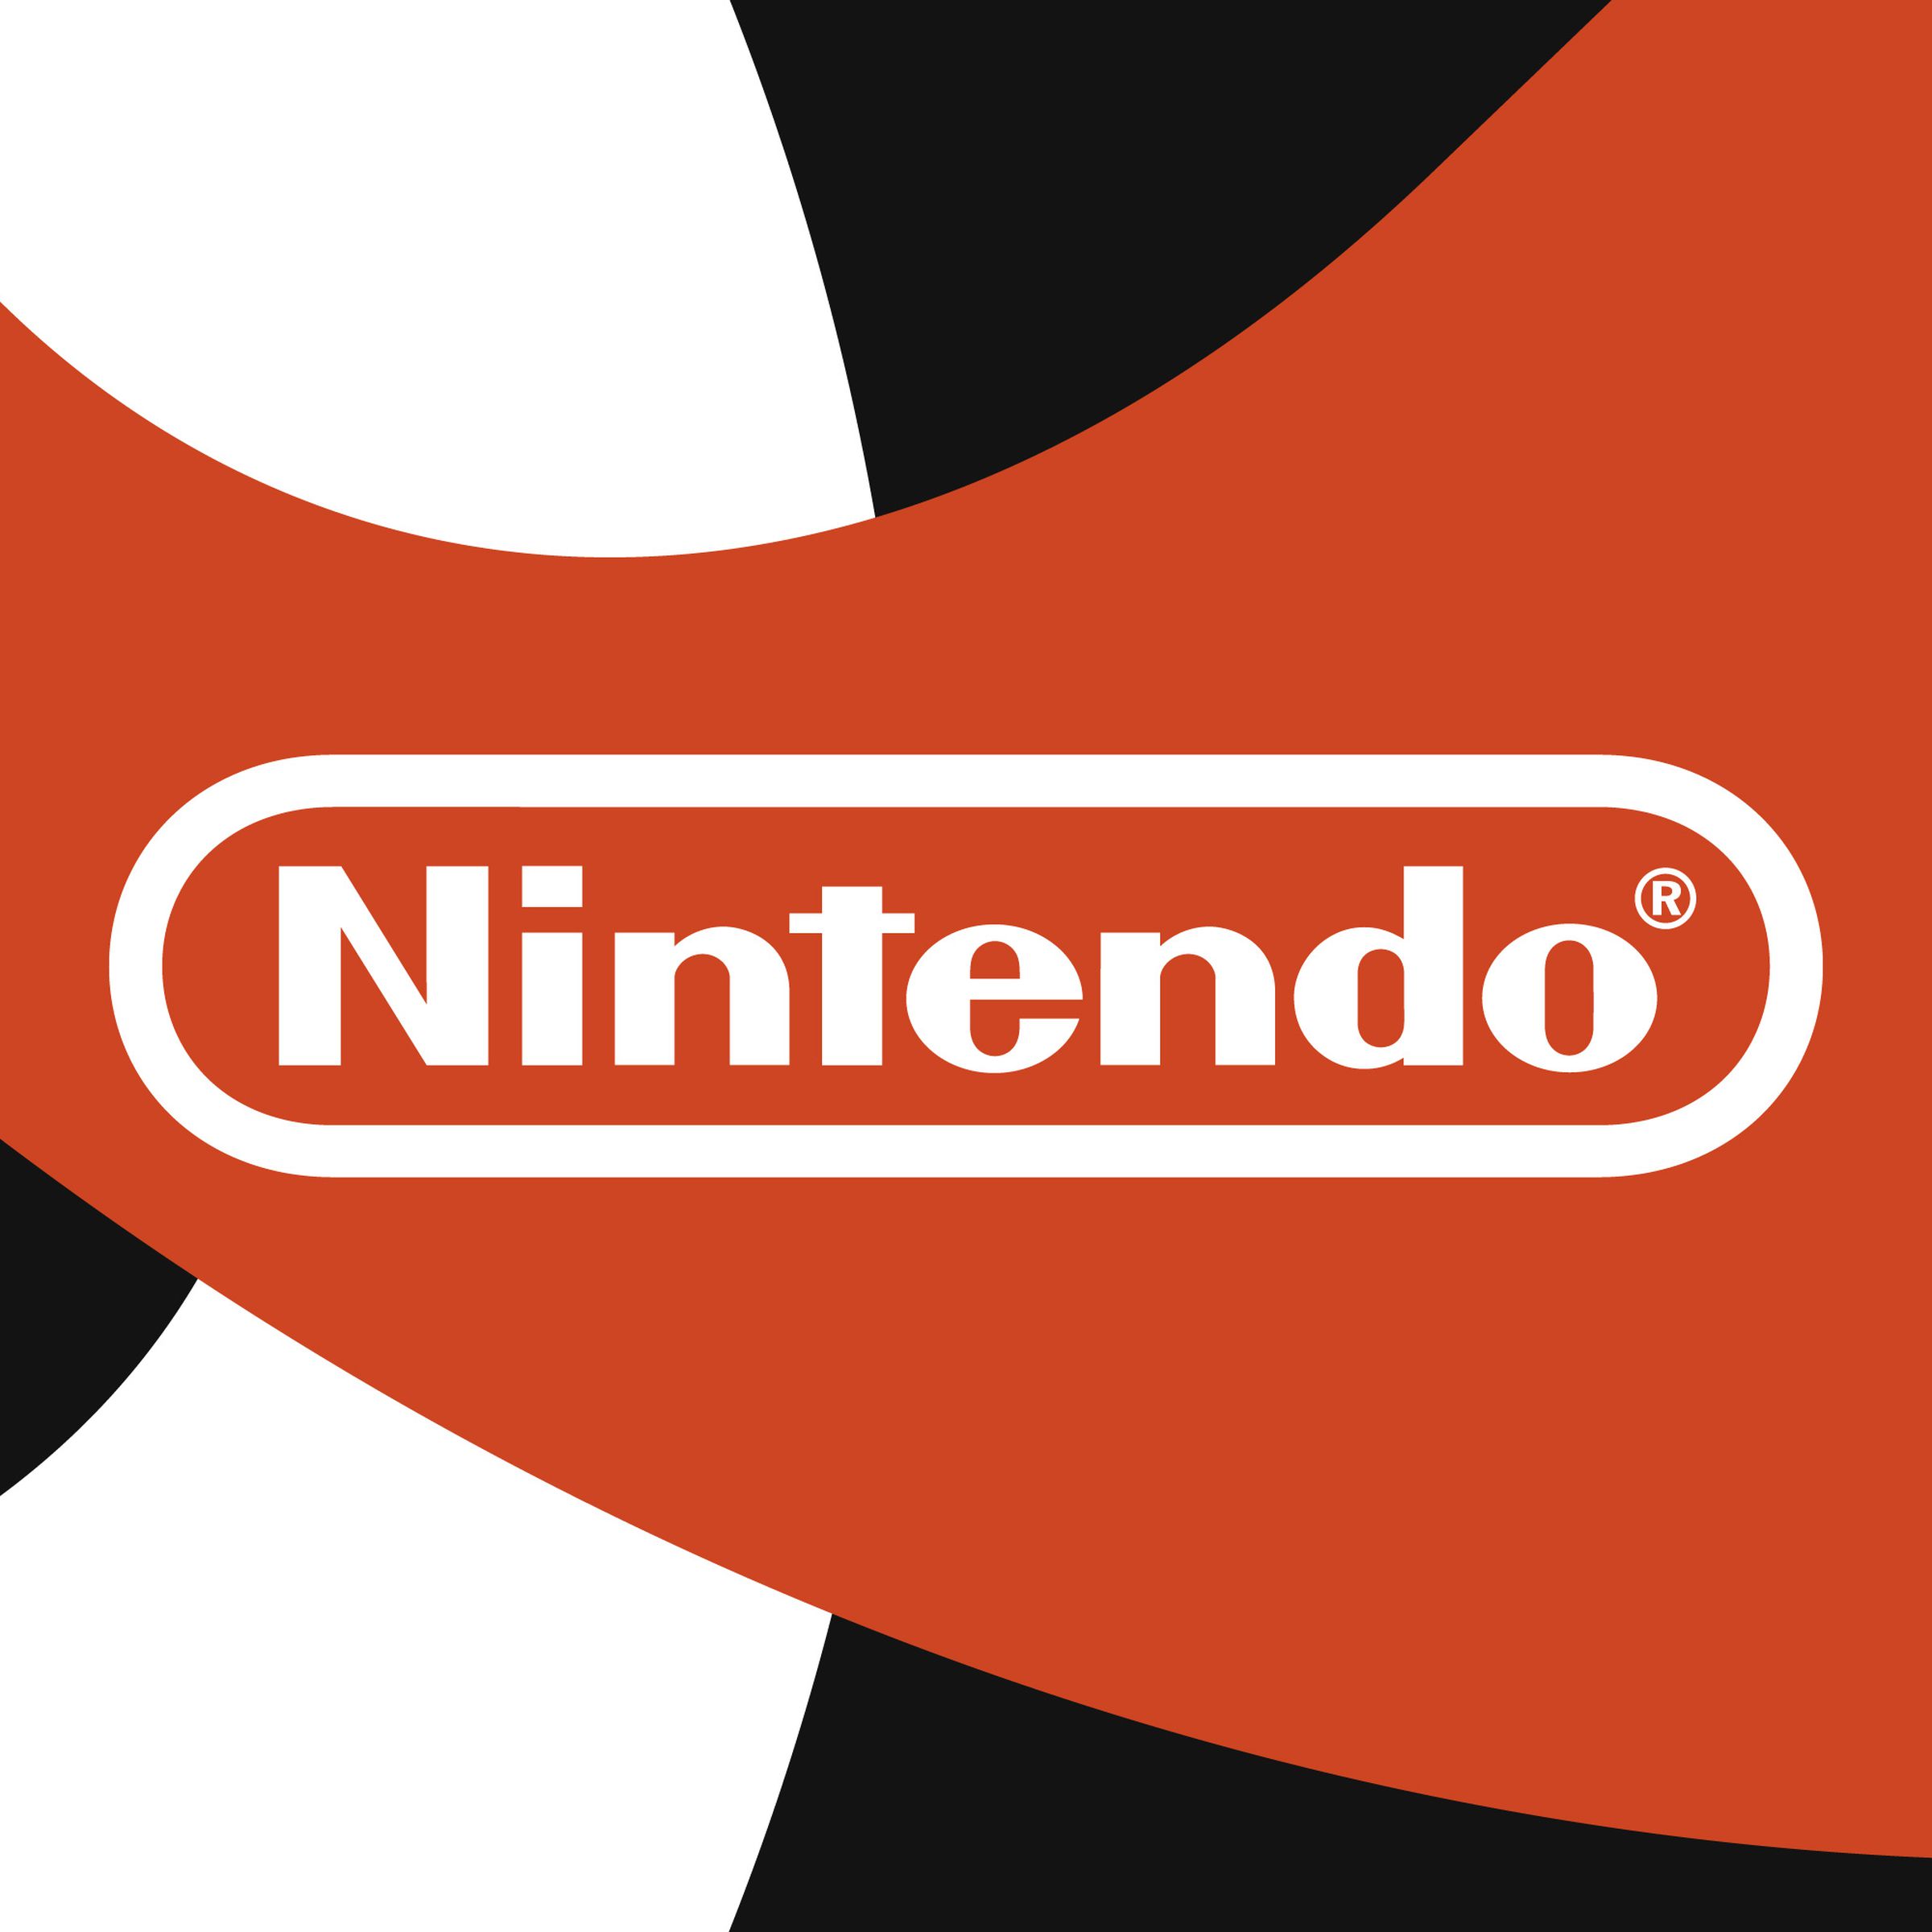 Nintendo’s logo